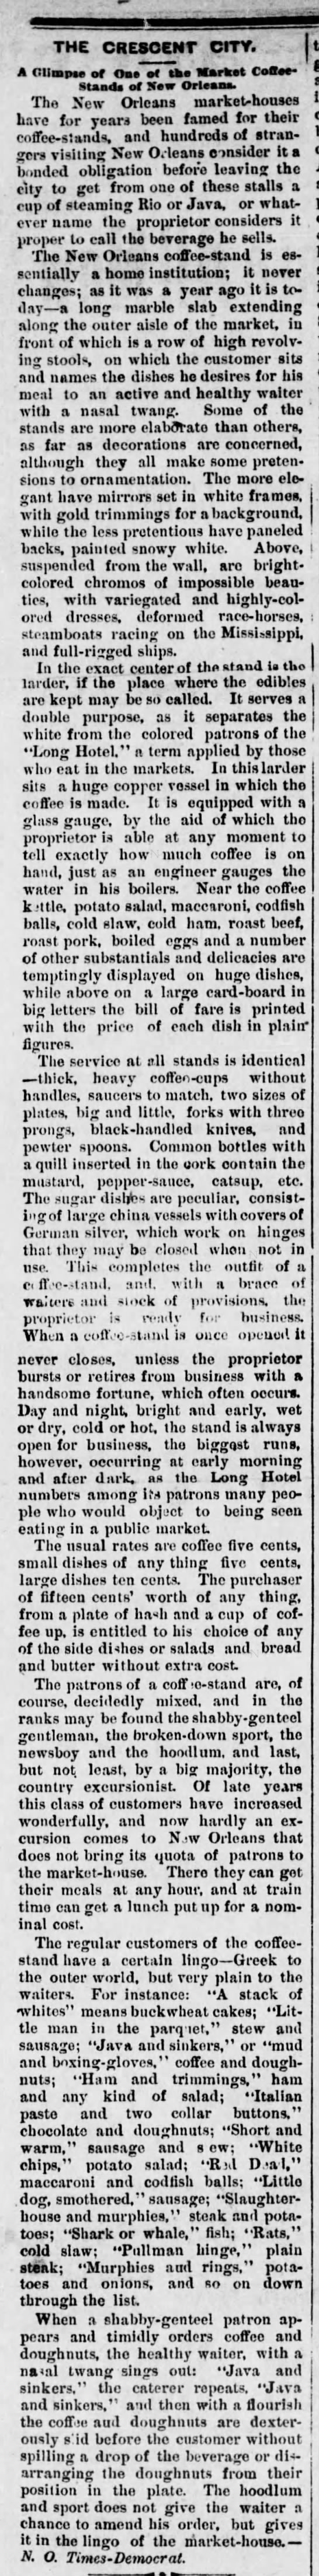 Restaurant slang. "Little dogs, smothered" = sausages (1887). - 